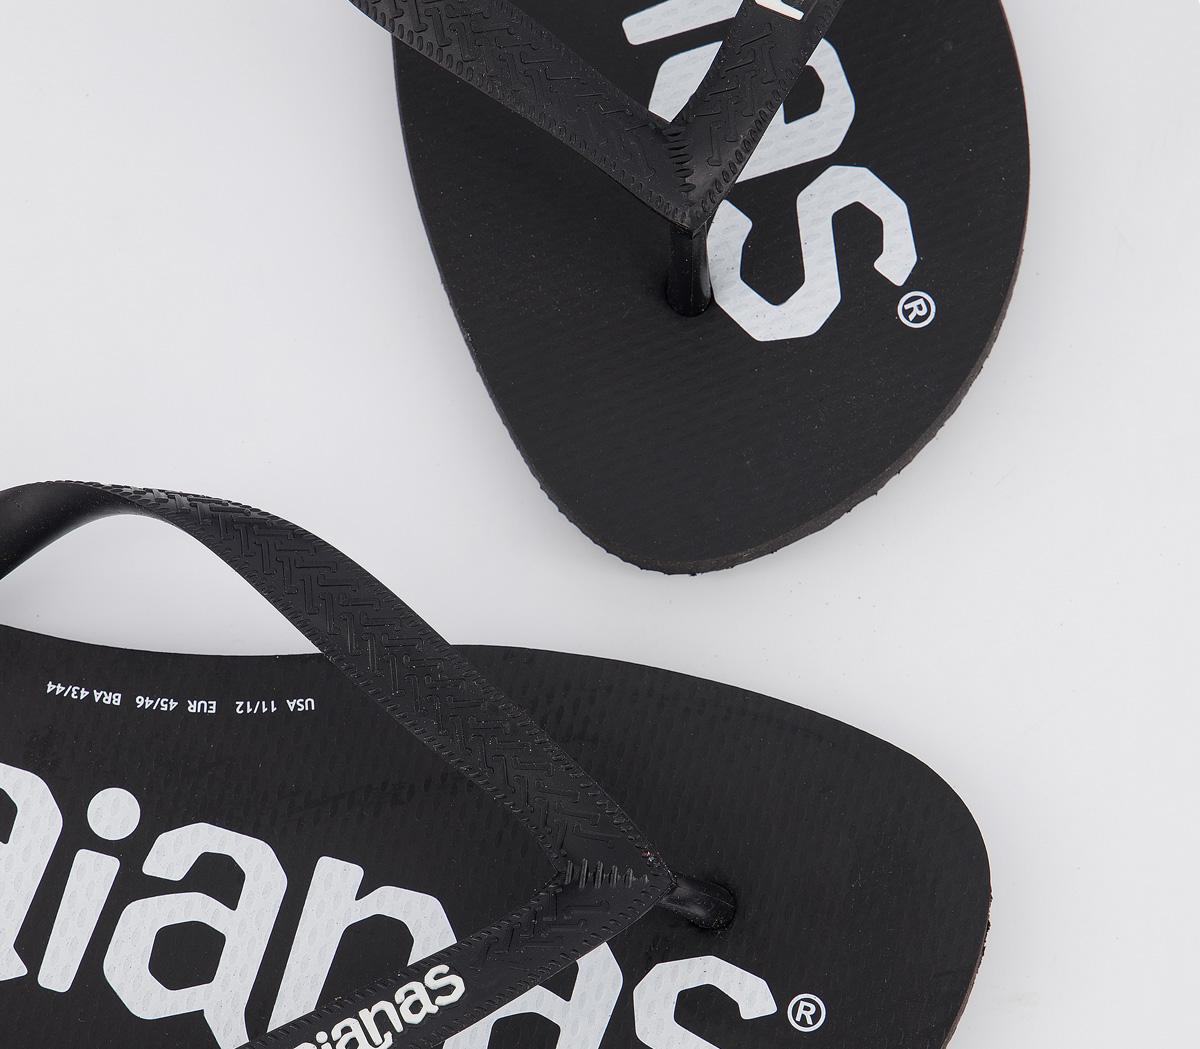 Havaianas Logo Mania Flip Flops Black - Men’s Sandals